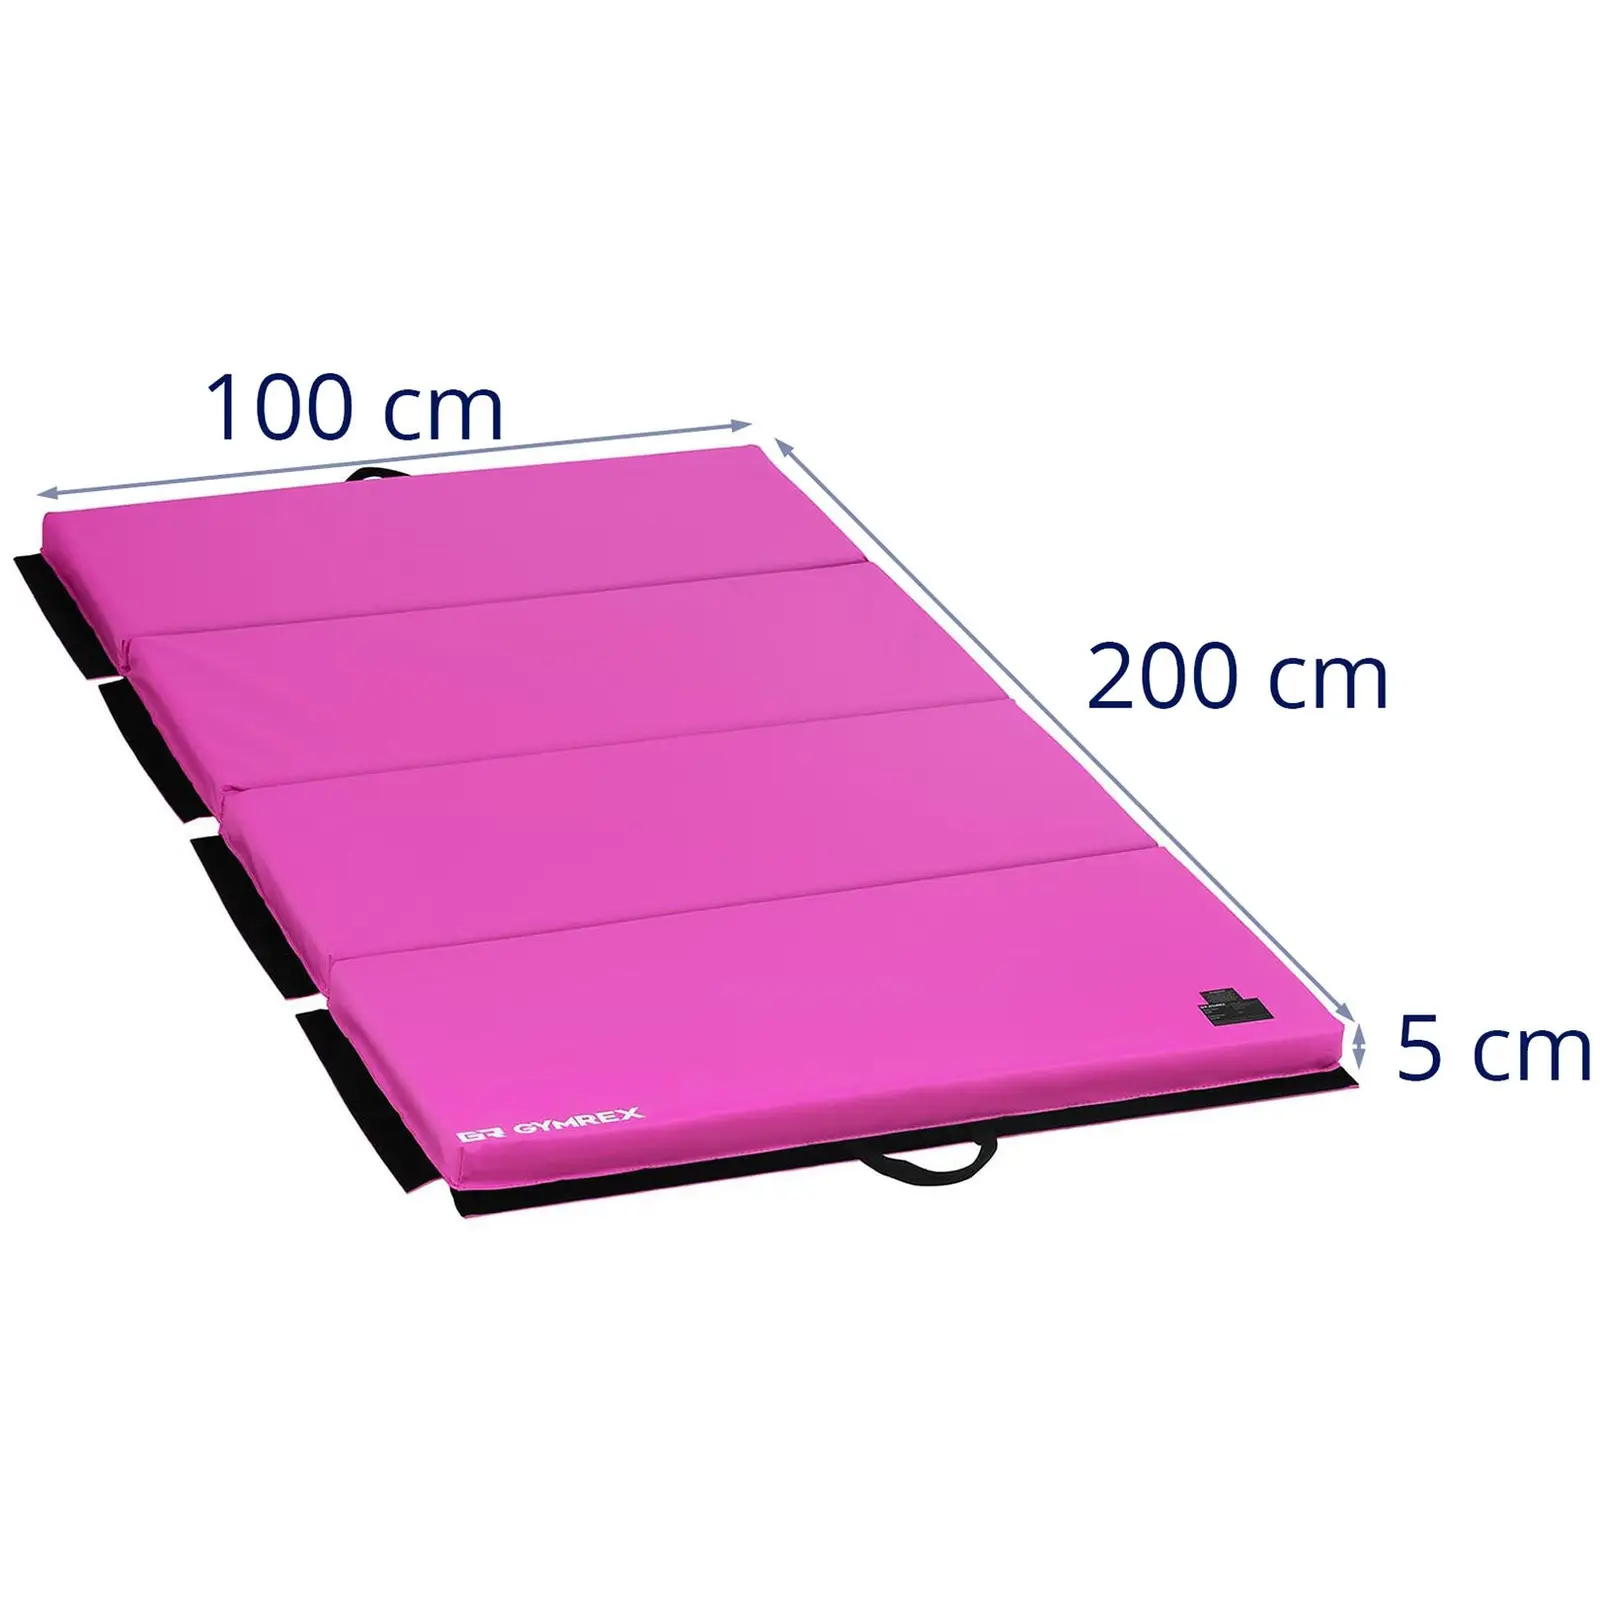 Tappetino fitness - 200 x 100 x 5 cm - Pieghevole -Pink/Pink